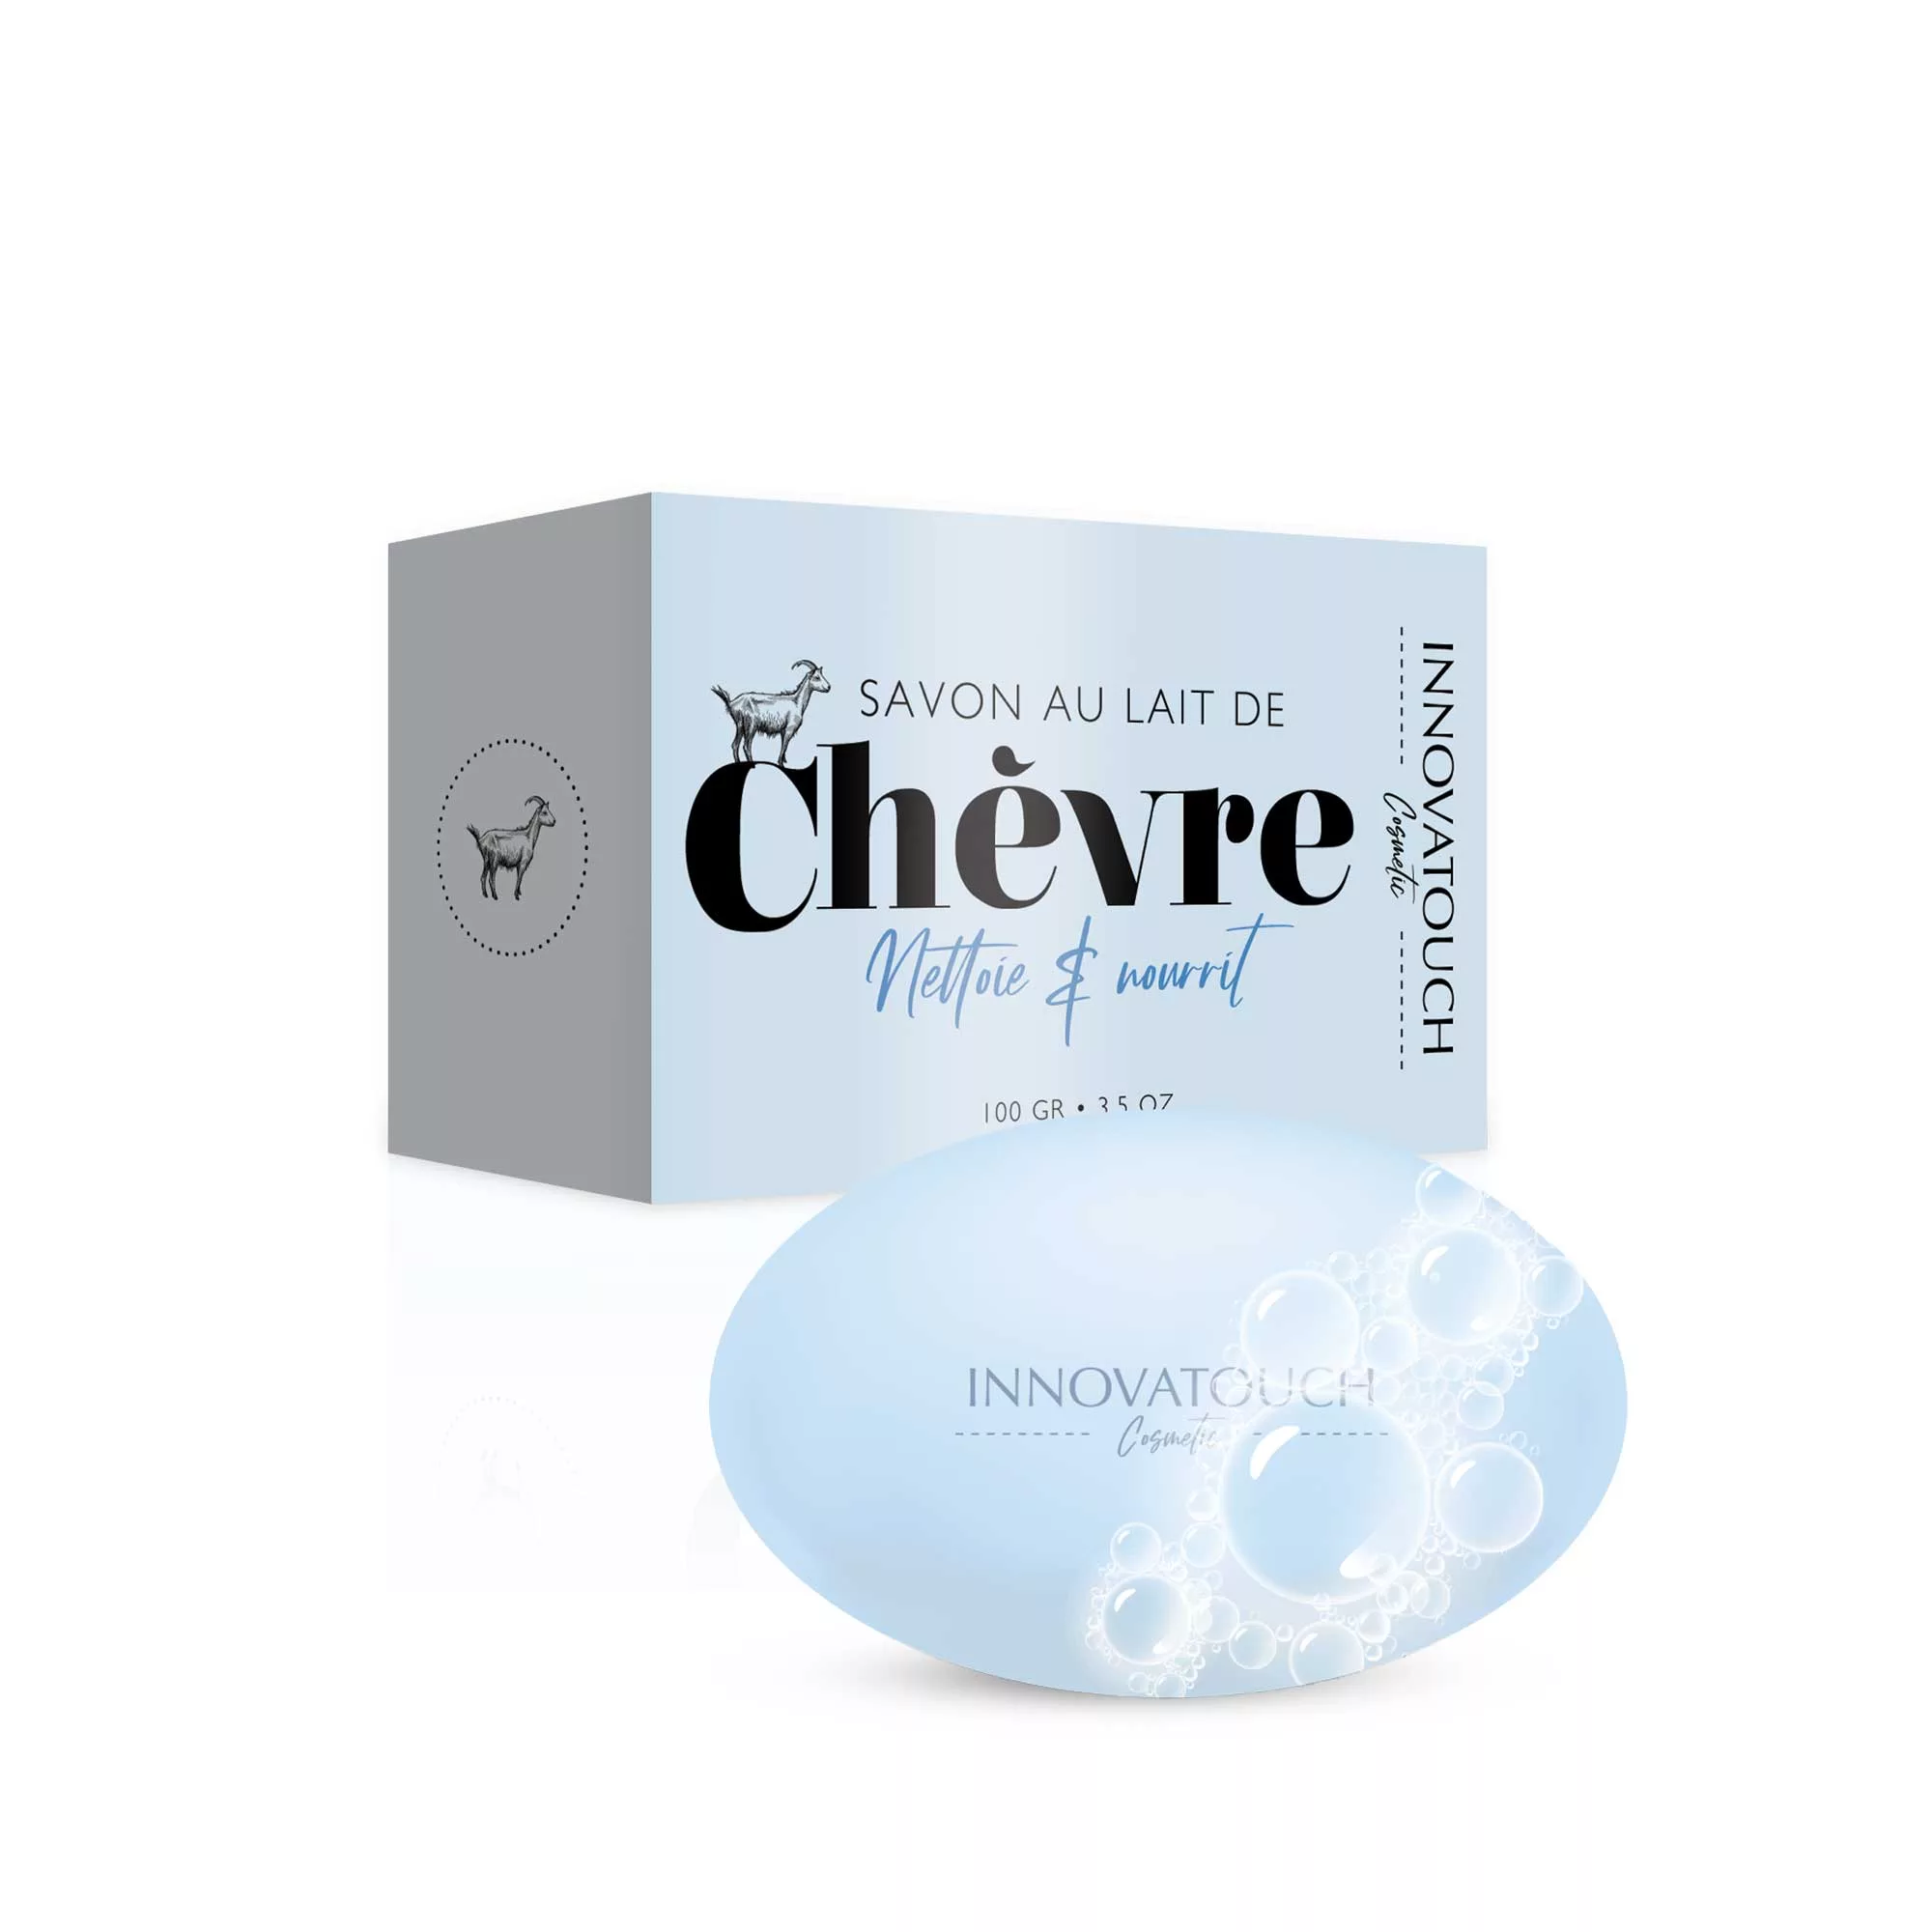 CHEVRE-savon-1-innovatouch-cosmetic